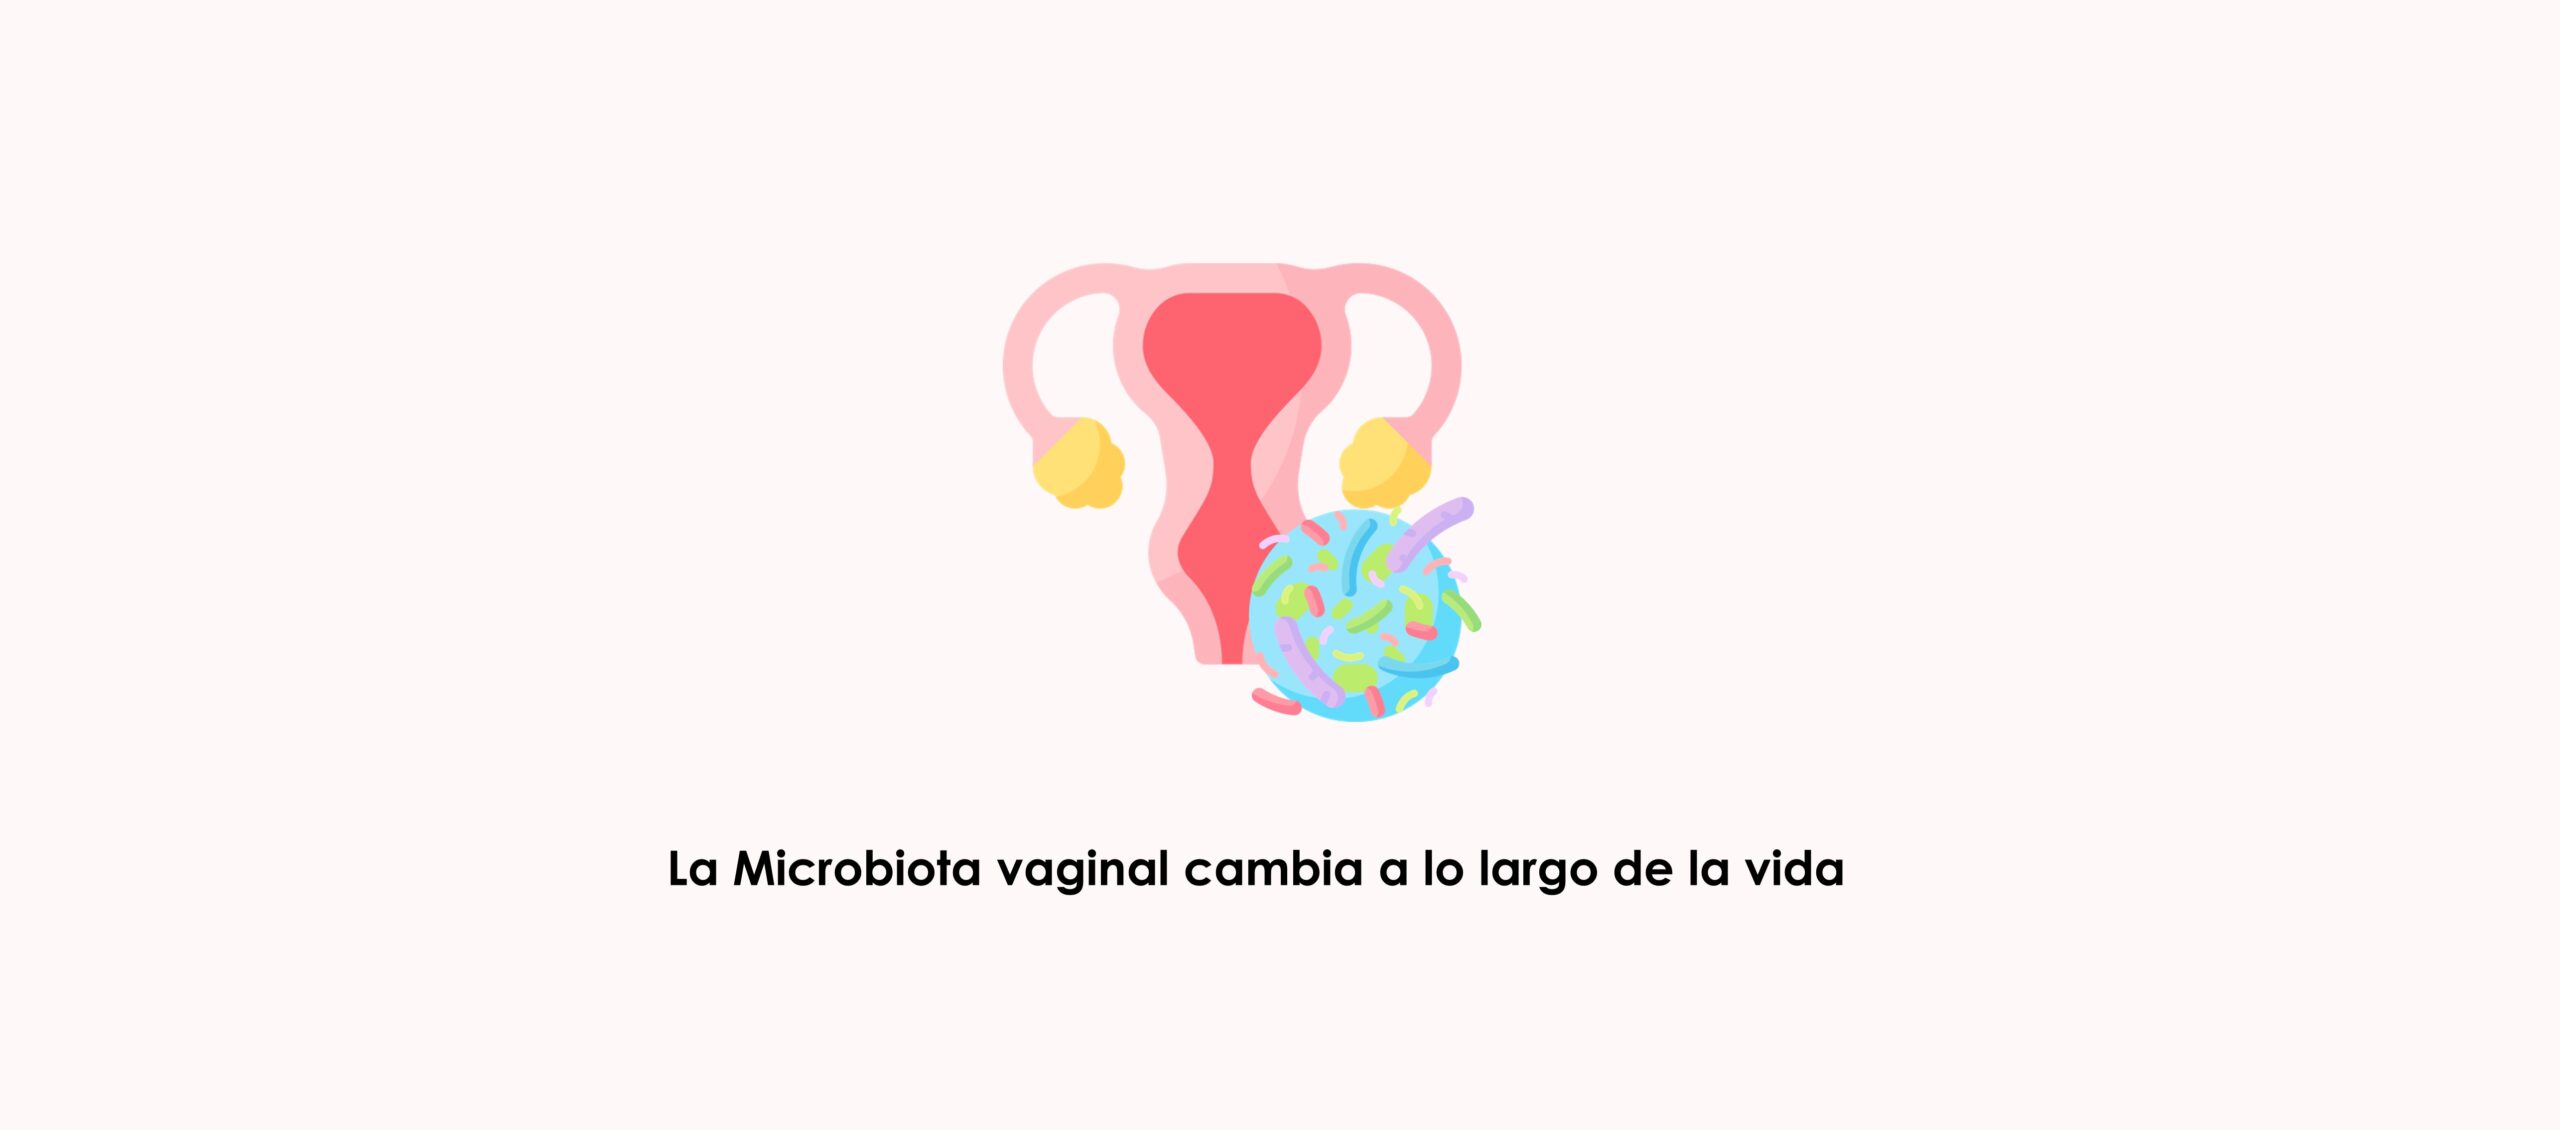 La flora vaginal o microbiota